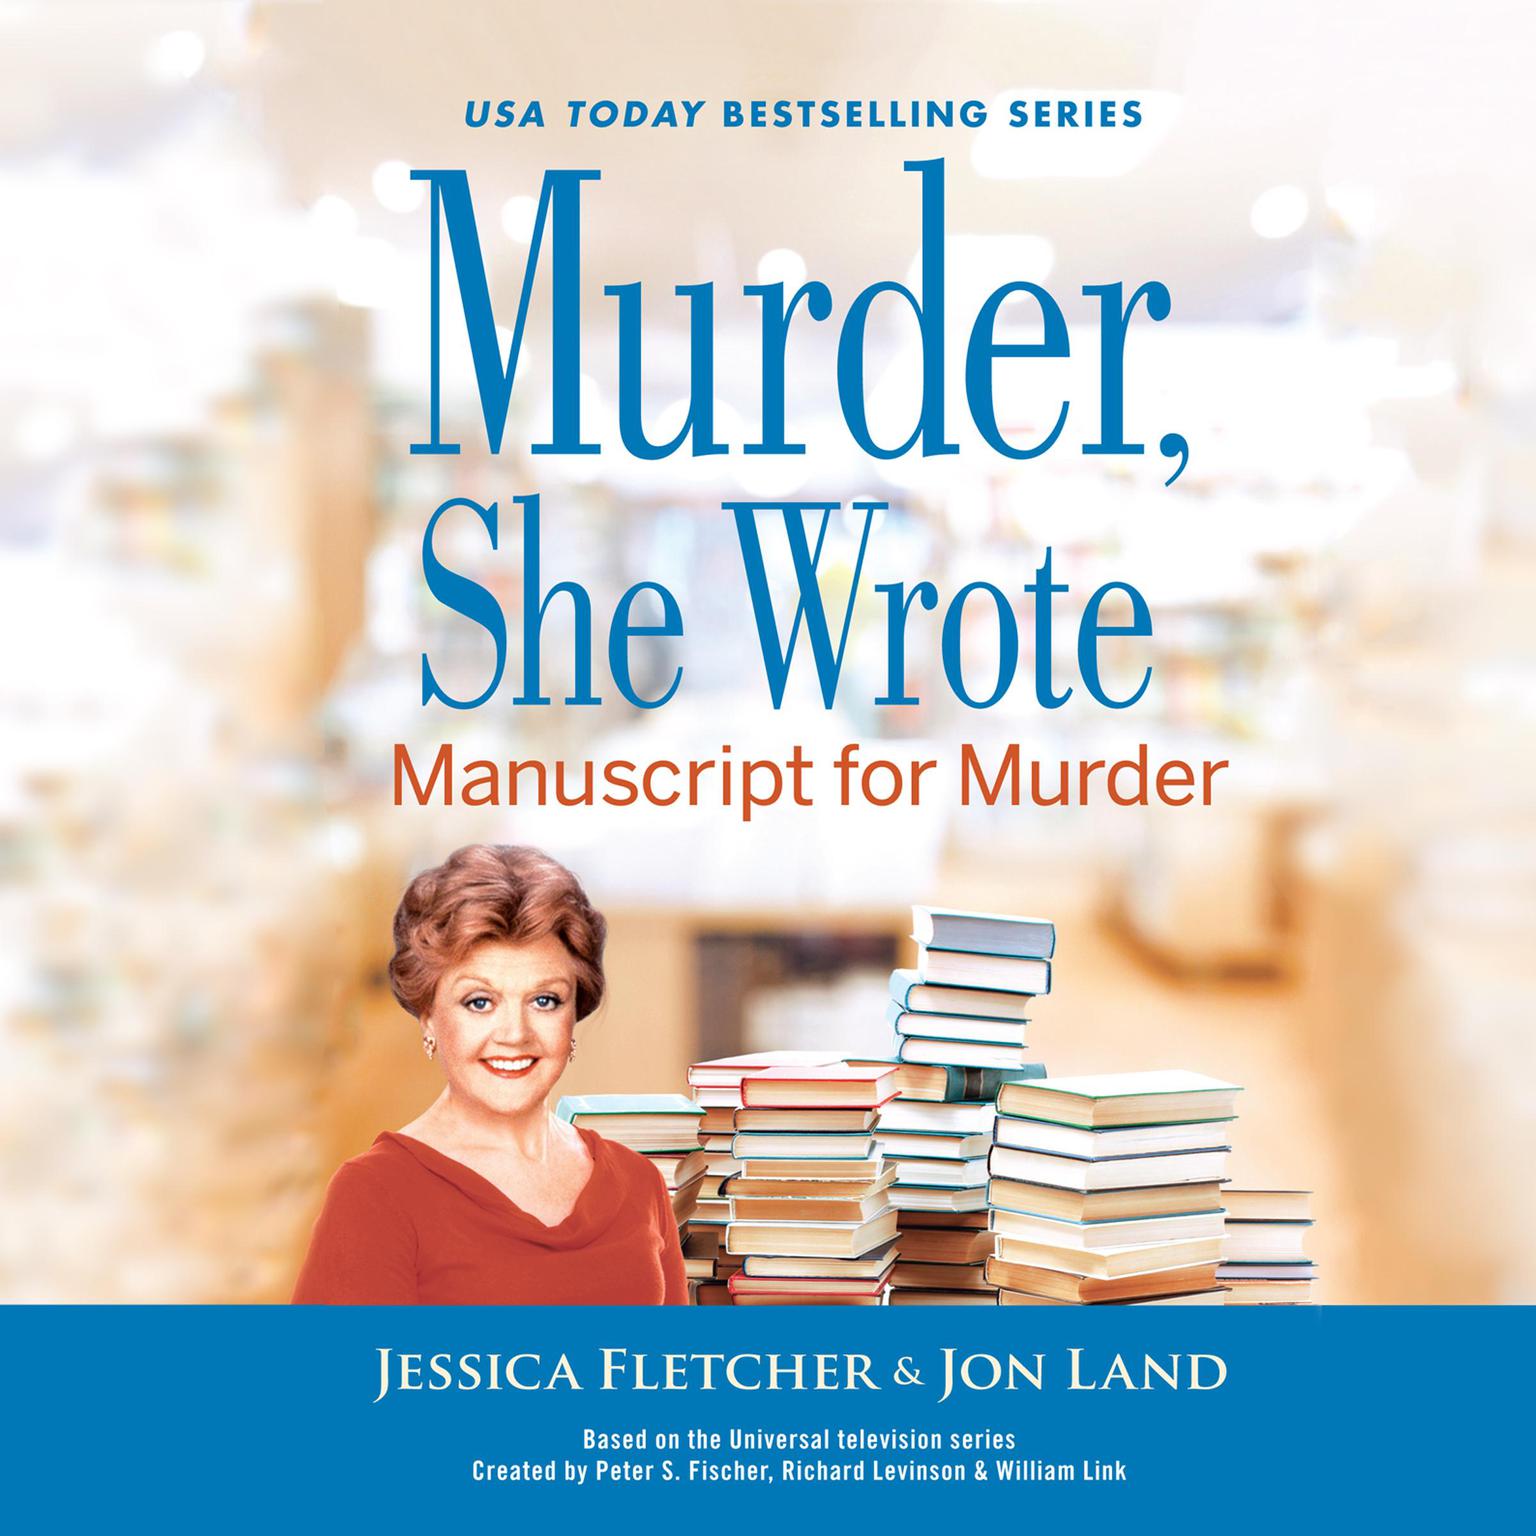 Murder, She Wrote: Manuscript for Murder: Manuscript for Murder Audiobook, by Jessica Fletcher